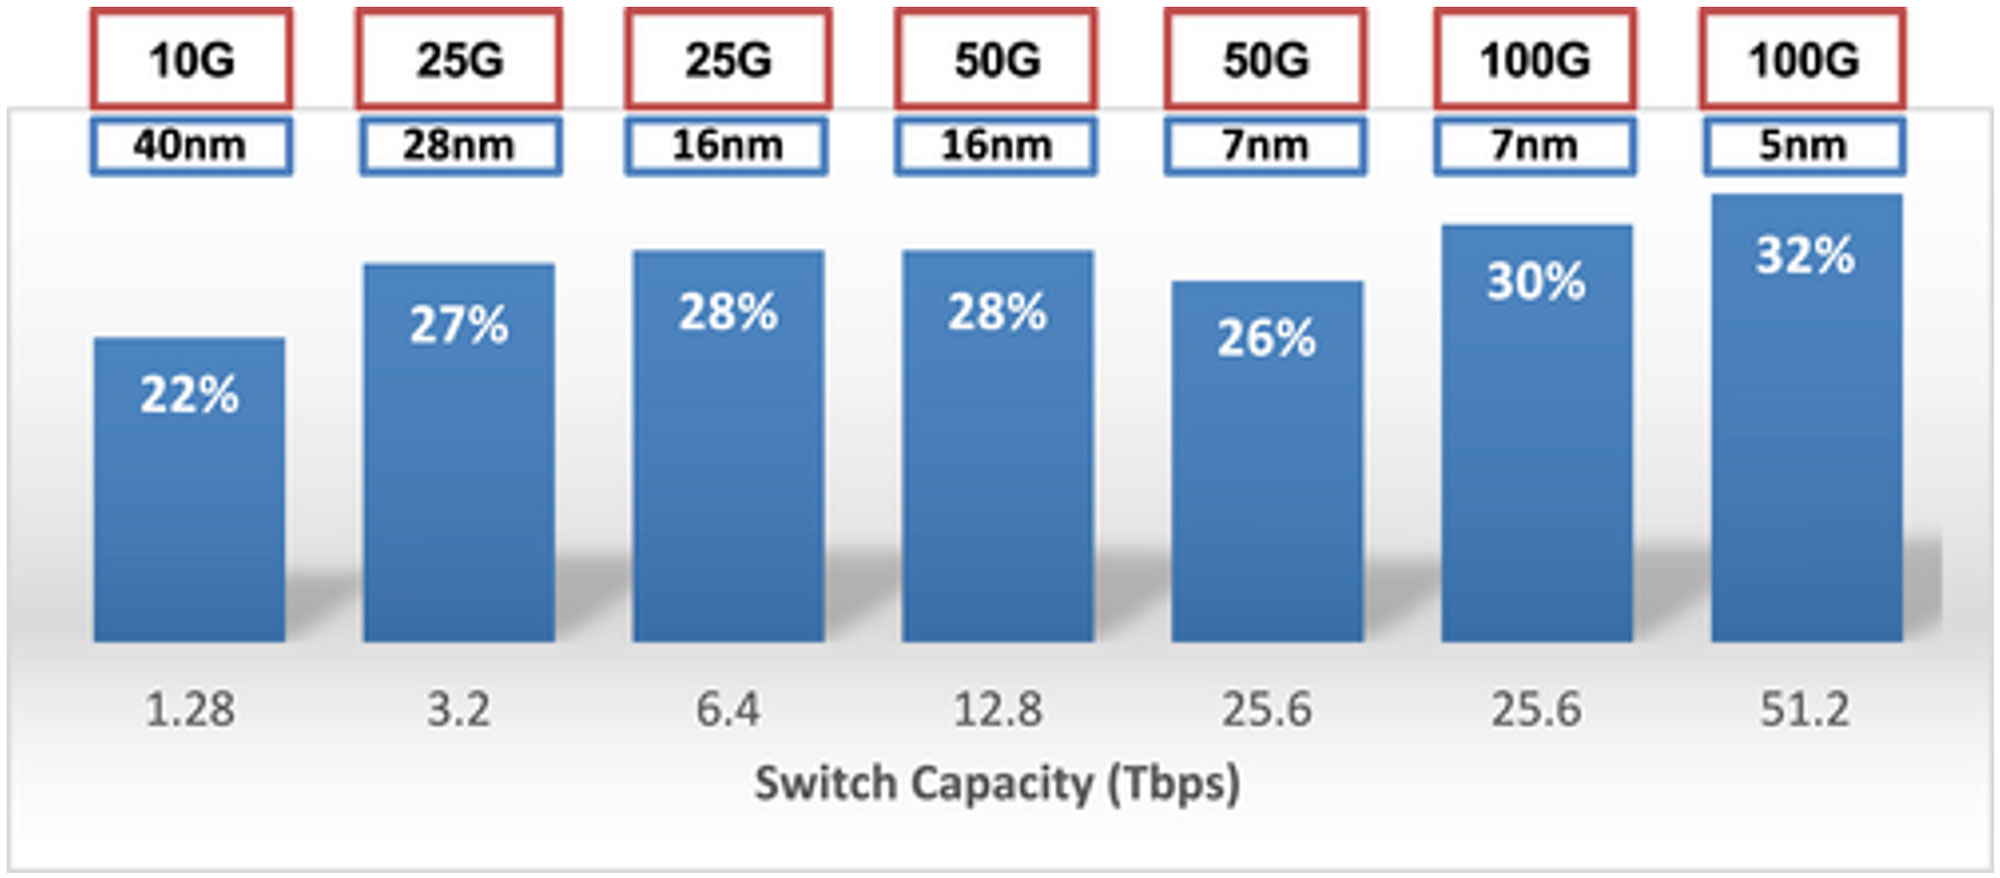 Switch Capacity (Tbps)